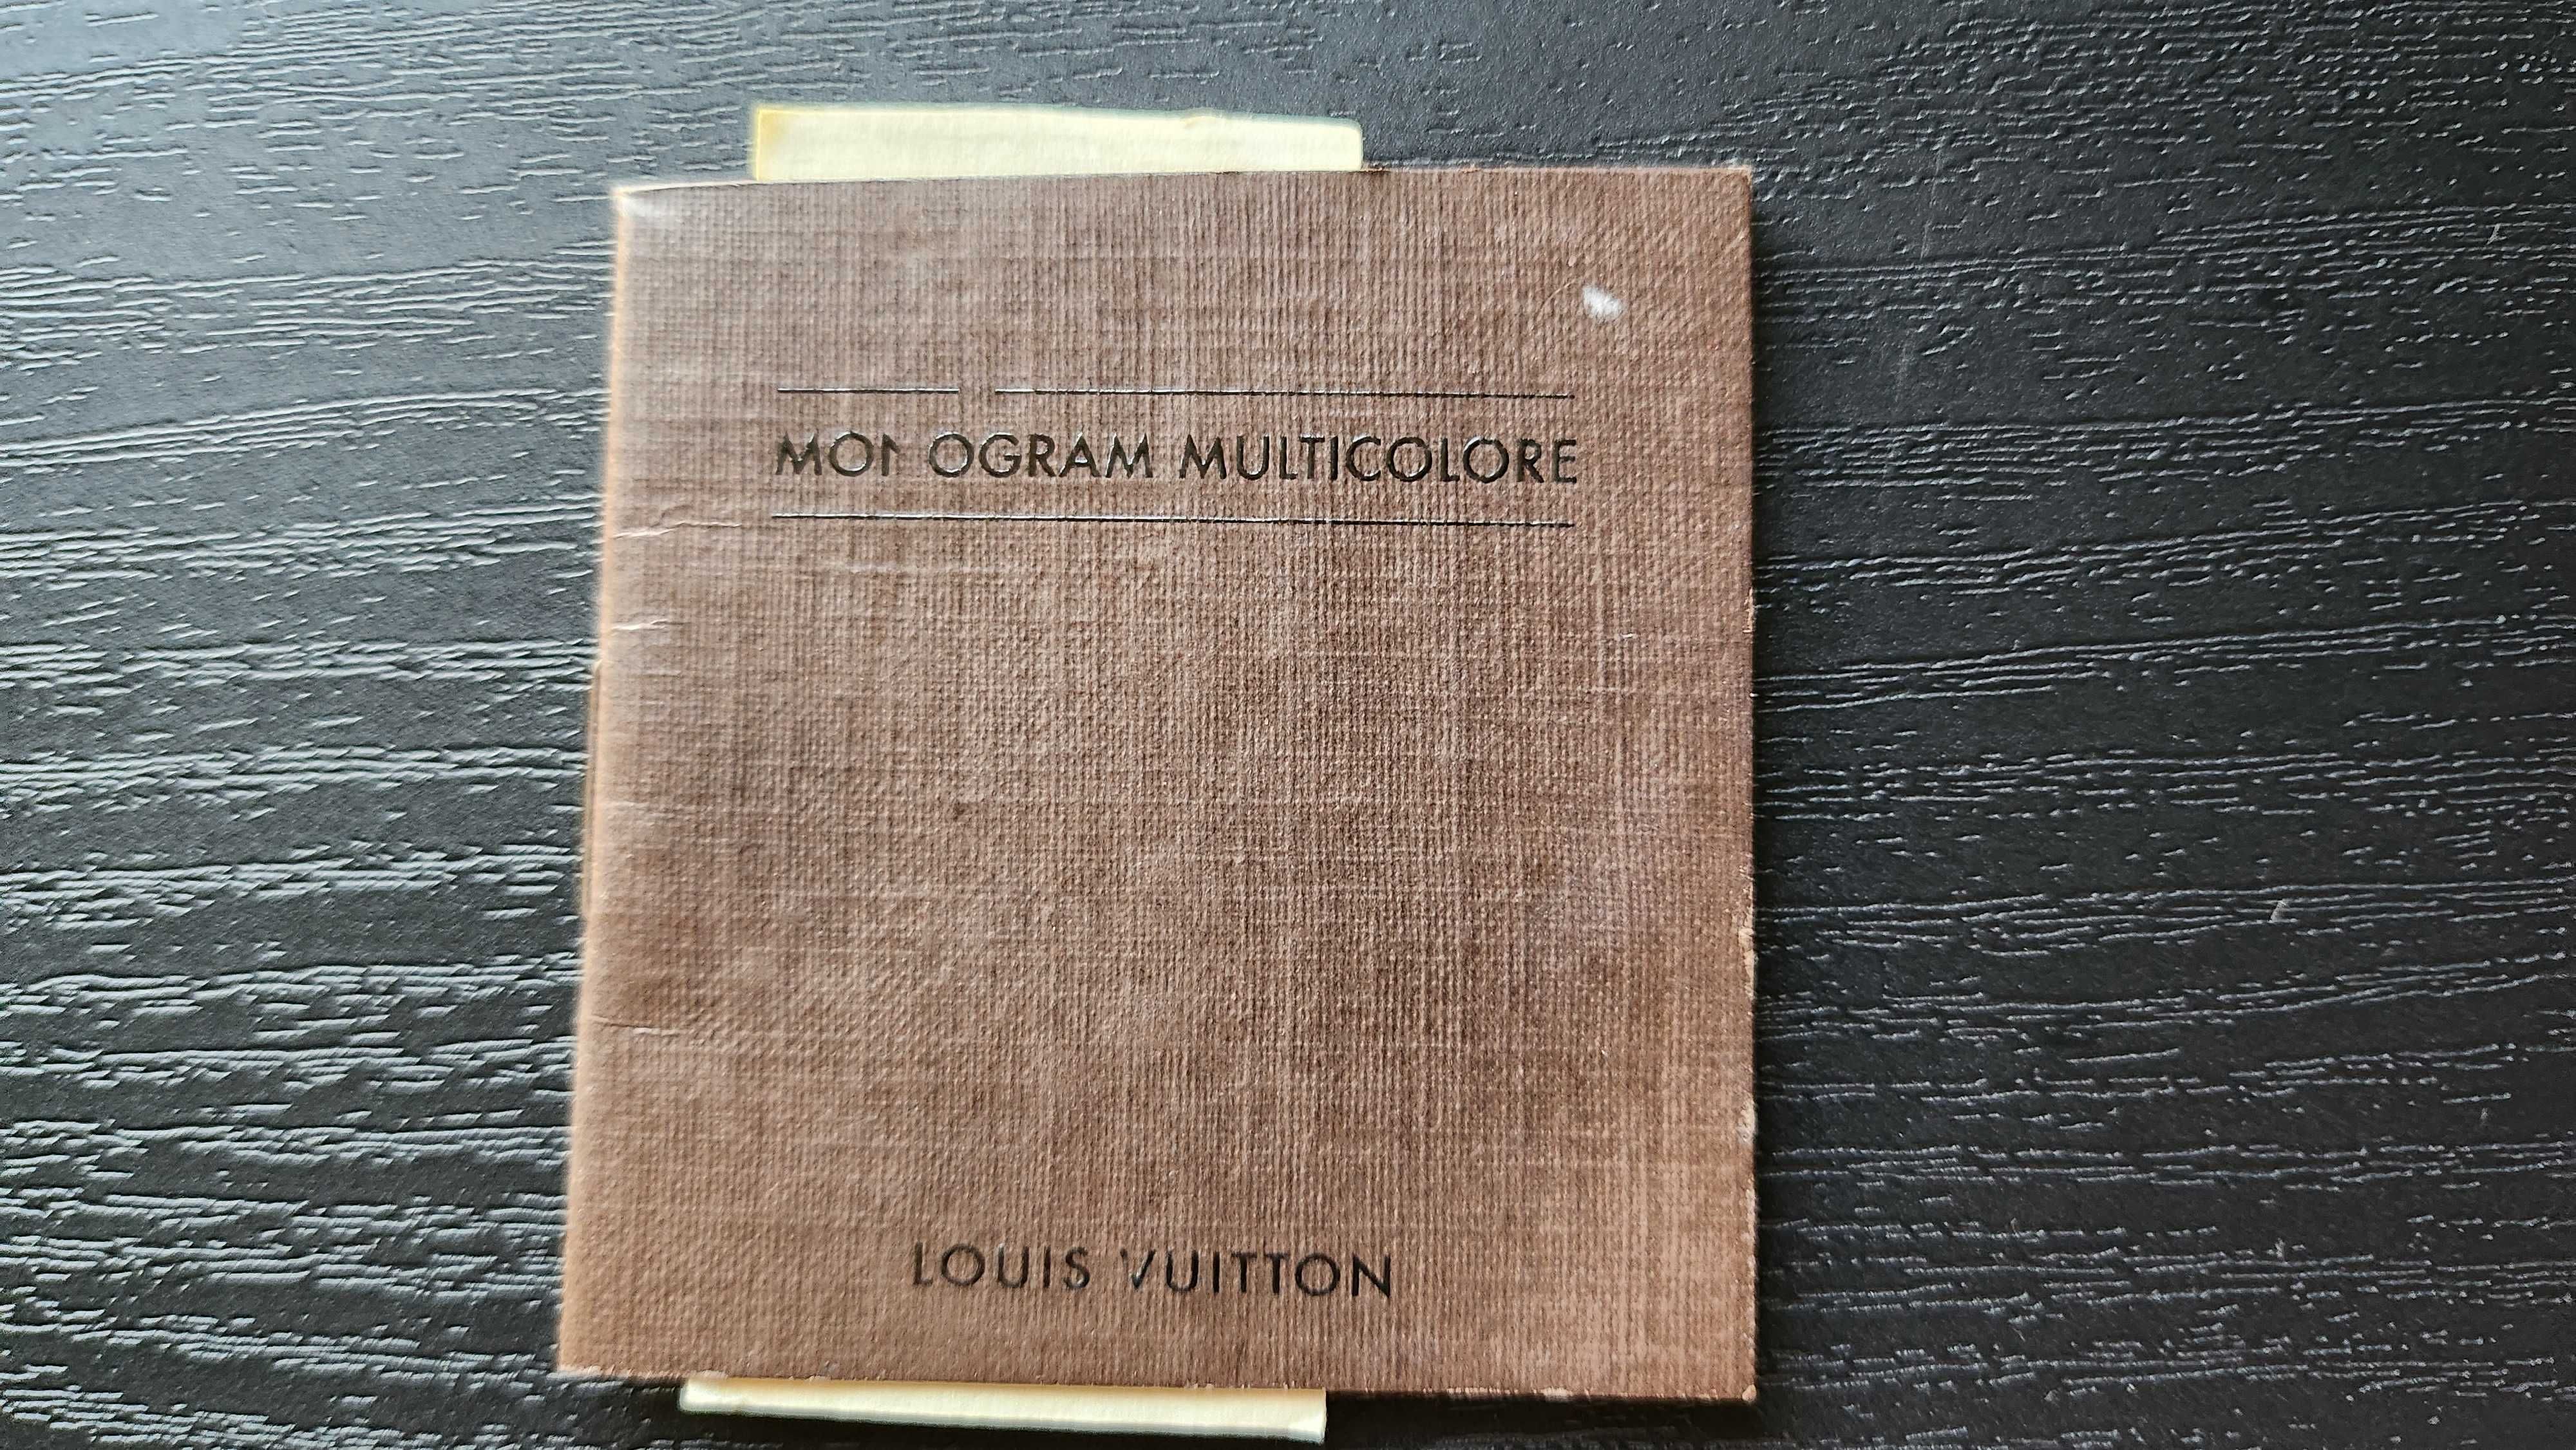 Geanta Louis Vuitton Monogram Multicolor